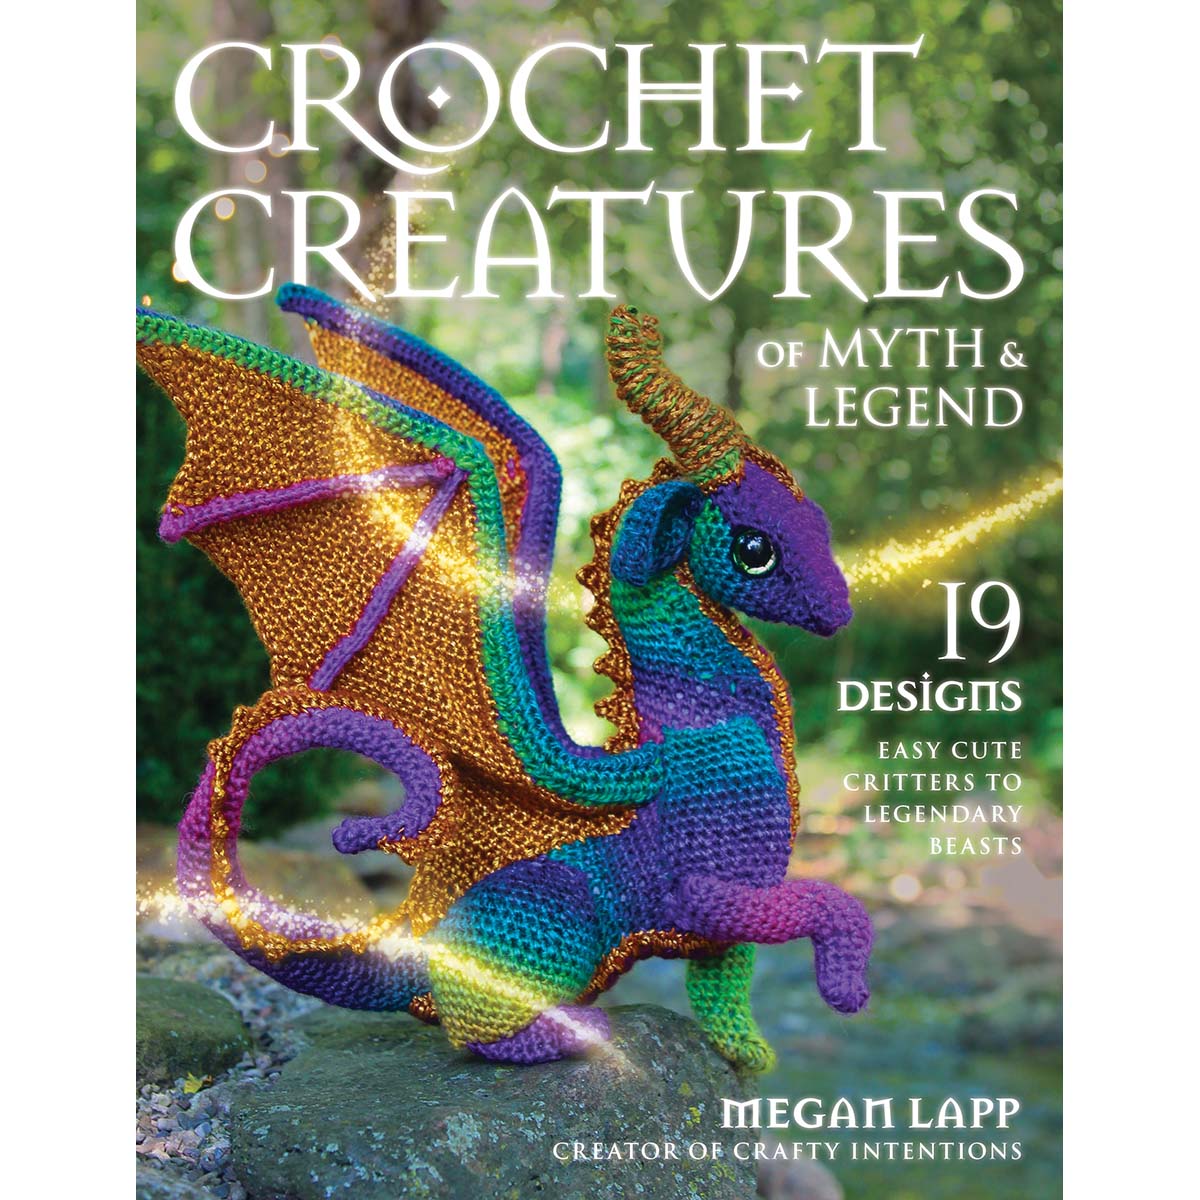 Stackpole Books Supersize Crochet Animals: 20 Adorable Amigurumi Sized to  Snuggle Crochet Book